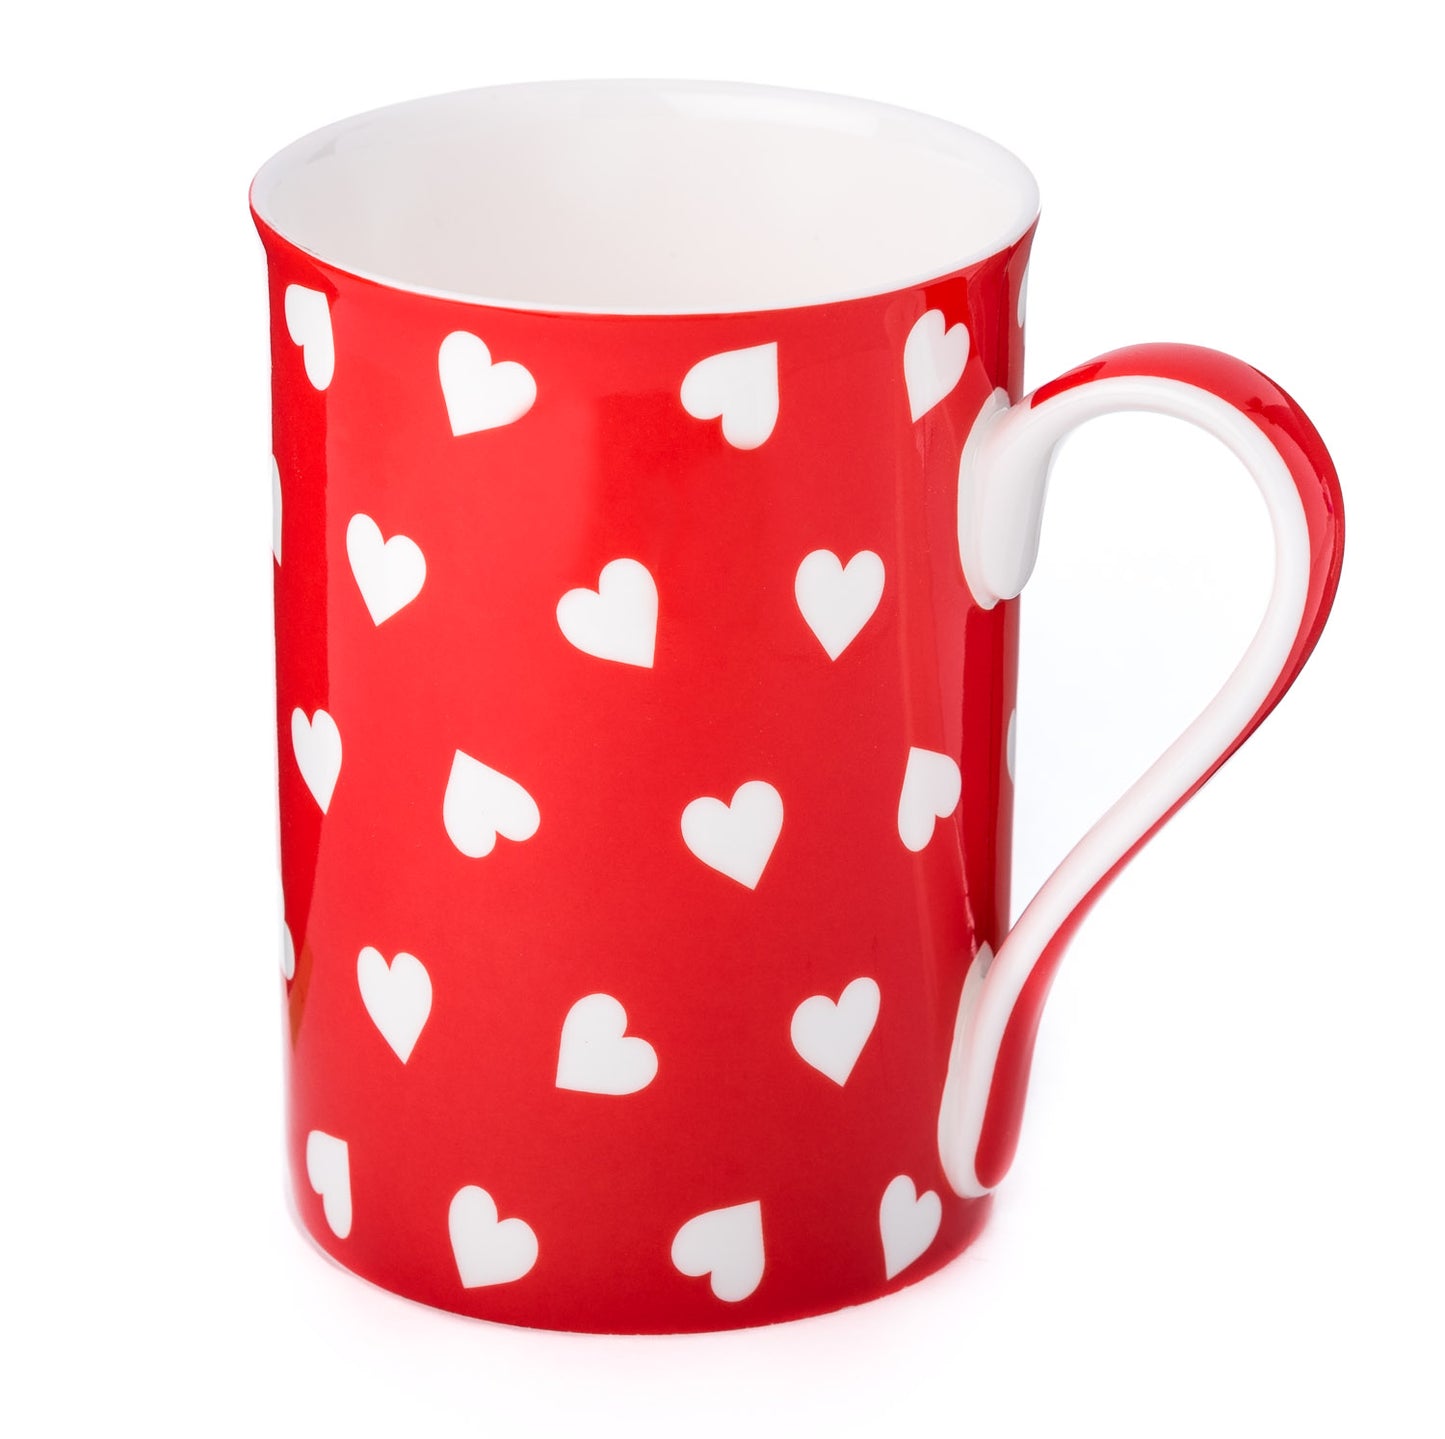 'Hearts on Red' Classico Mug